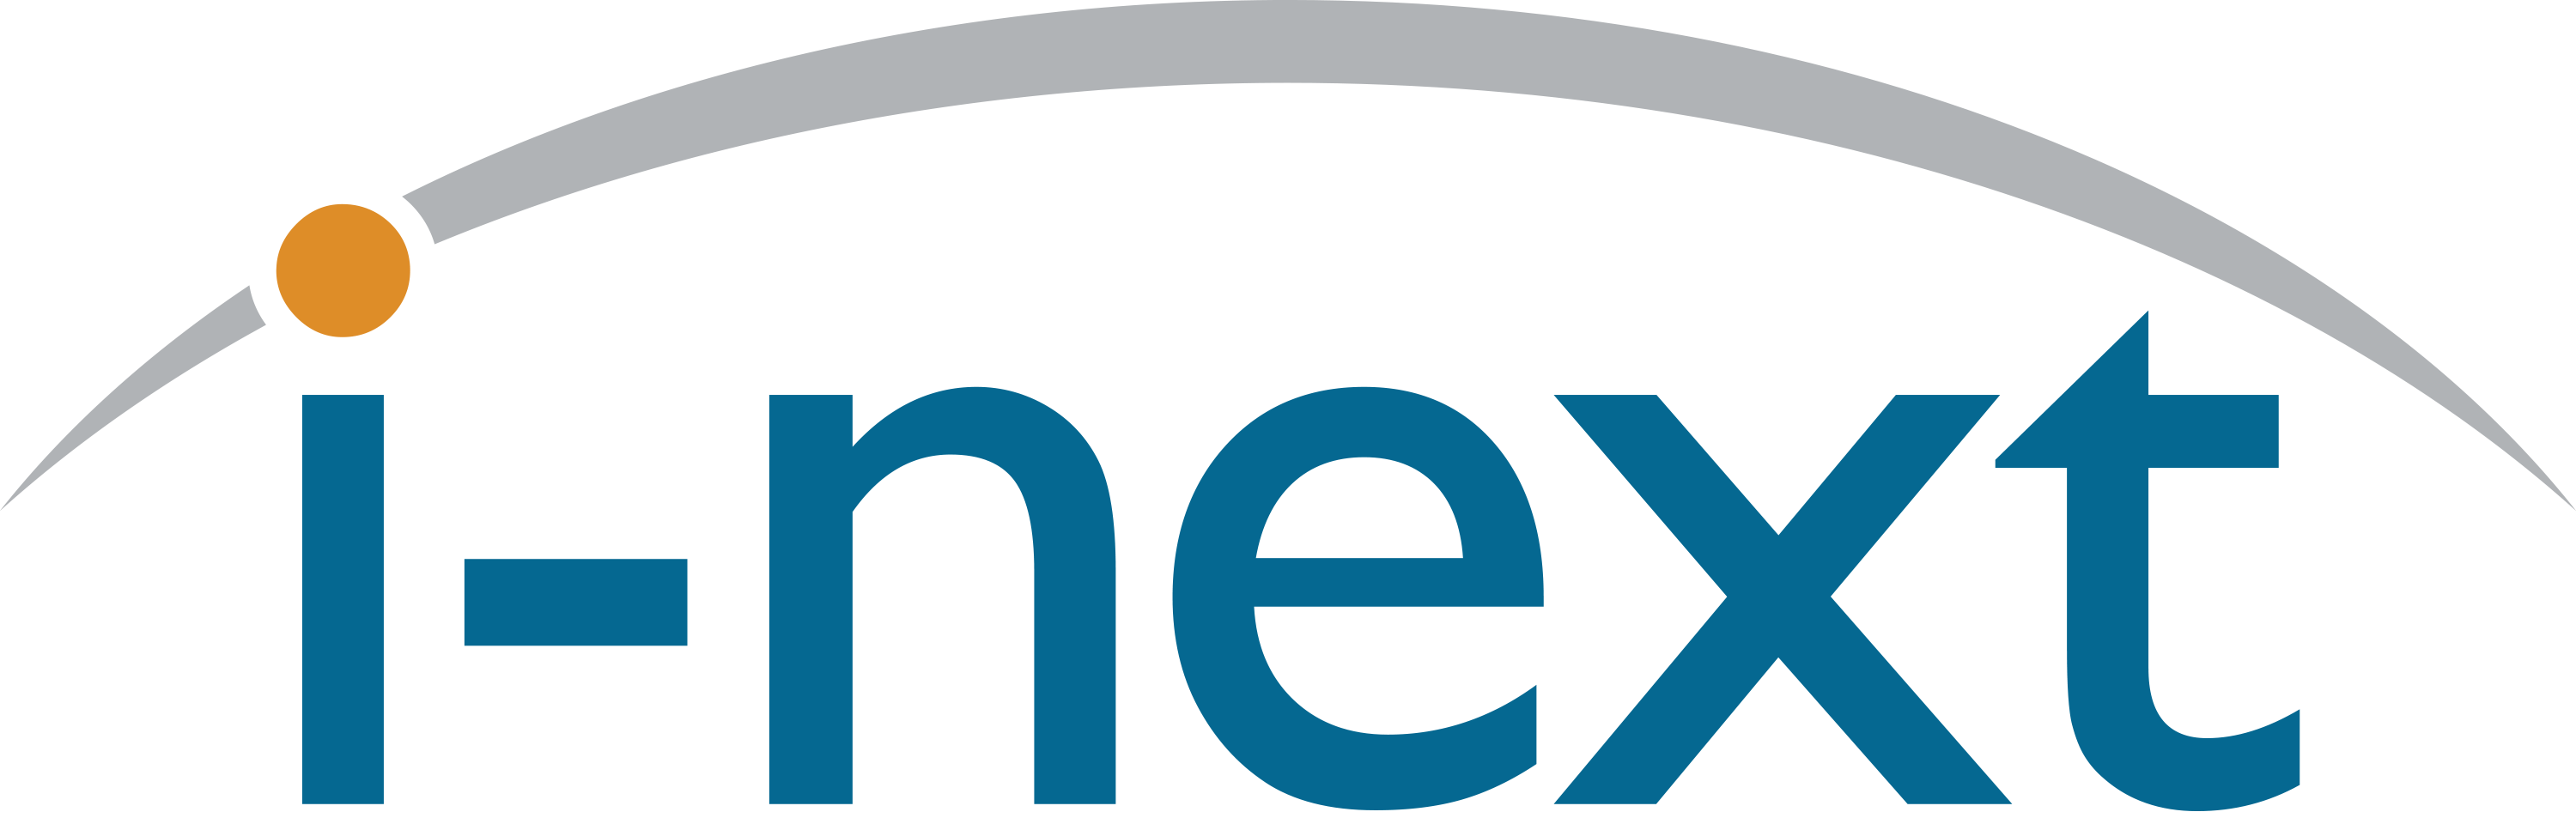 Linked logo for I-Next Limited